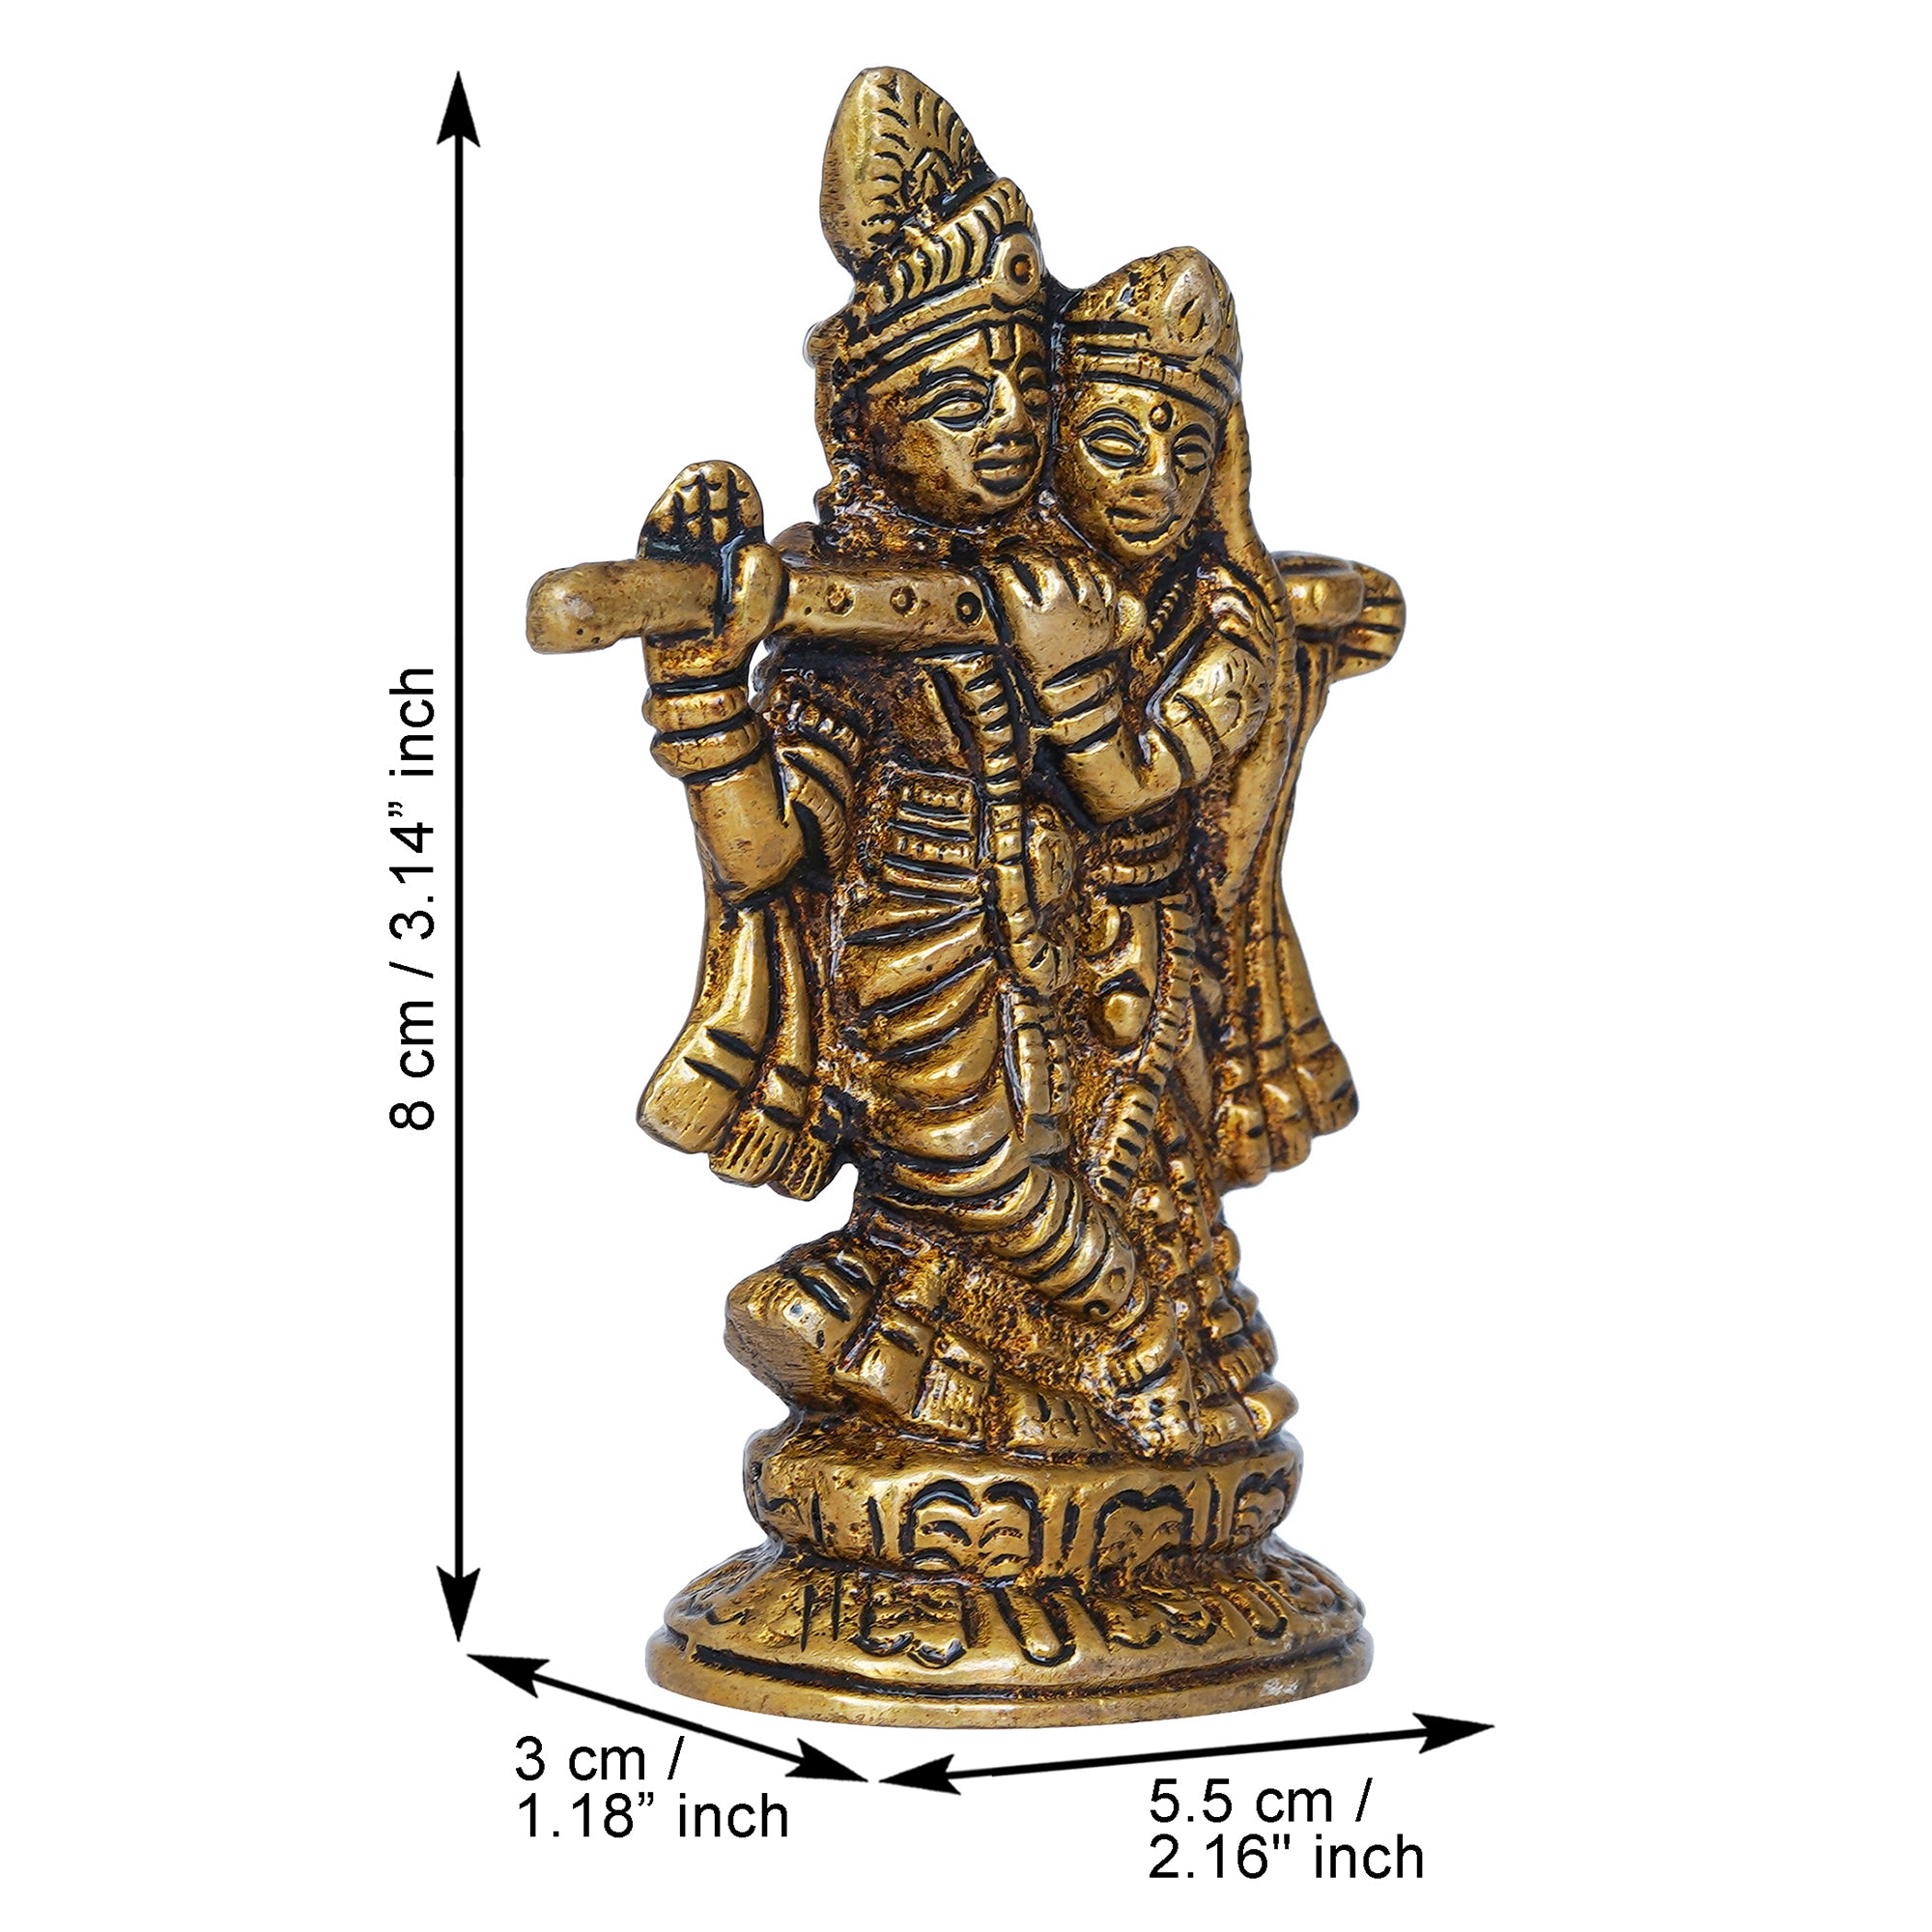 Golden Brass Radha Krishna Murti Idol - God Goddess Statue Decorative Showpiece for Home, Office, Car Dashboard - Gift for Festivals like Janmashtami, Radha Ashtami, and Diwali 3